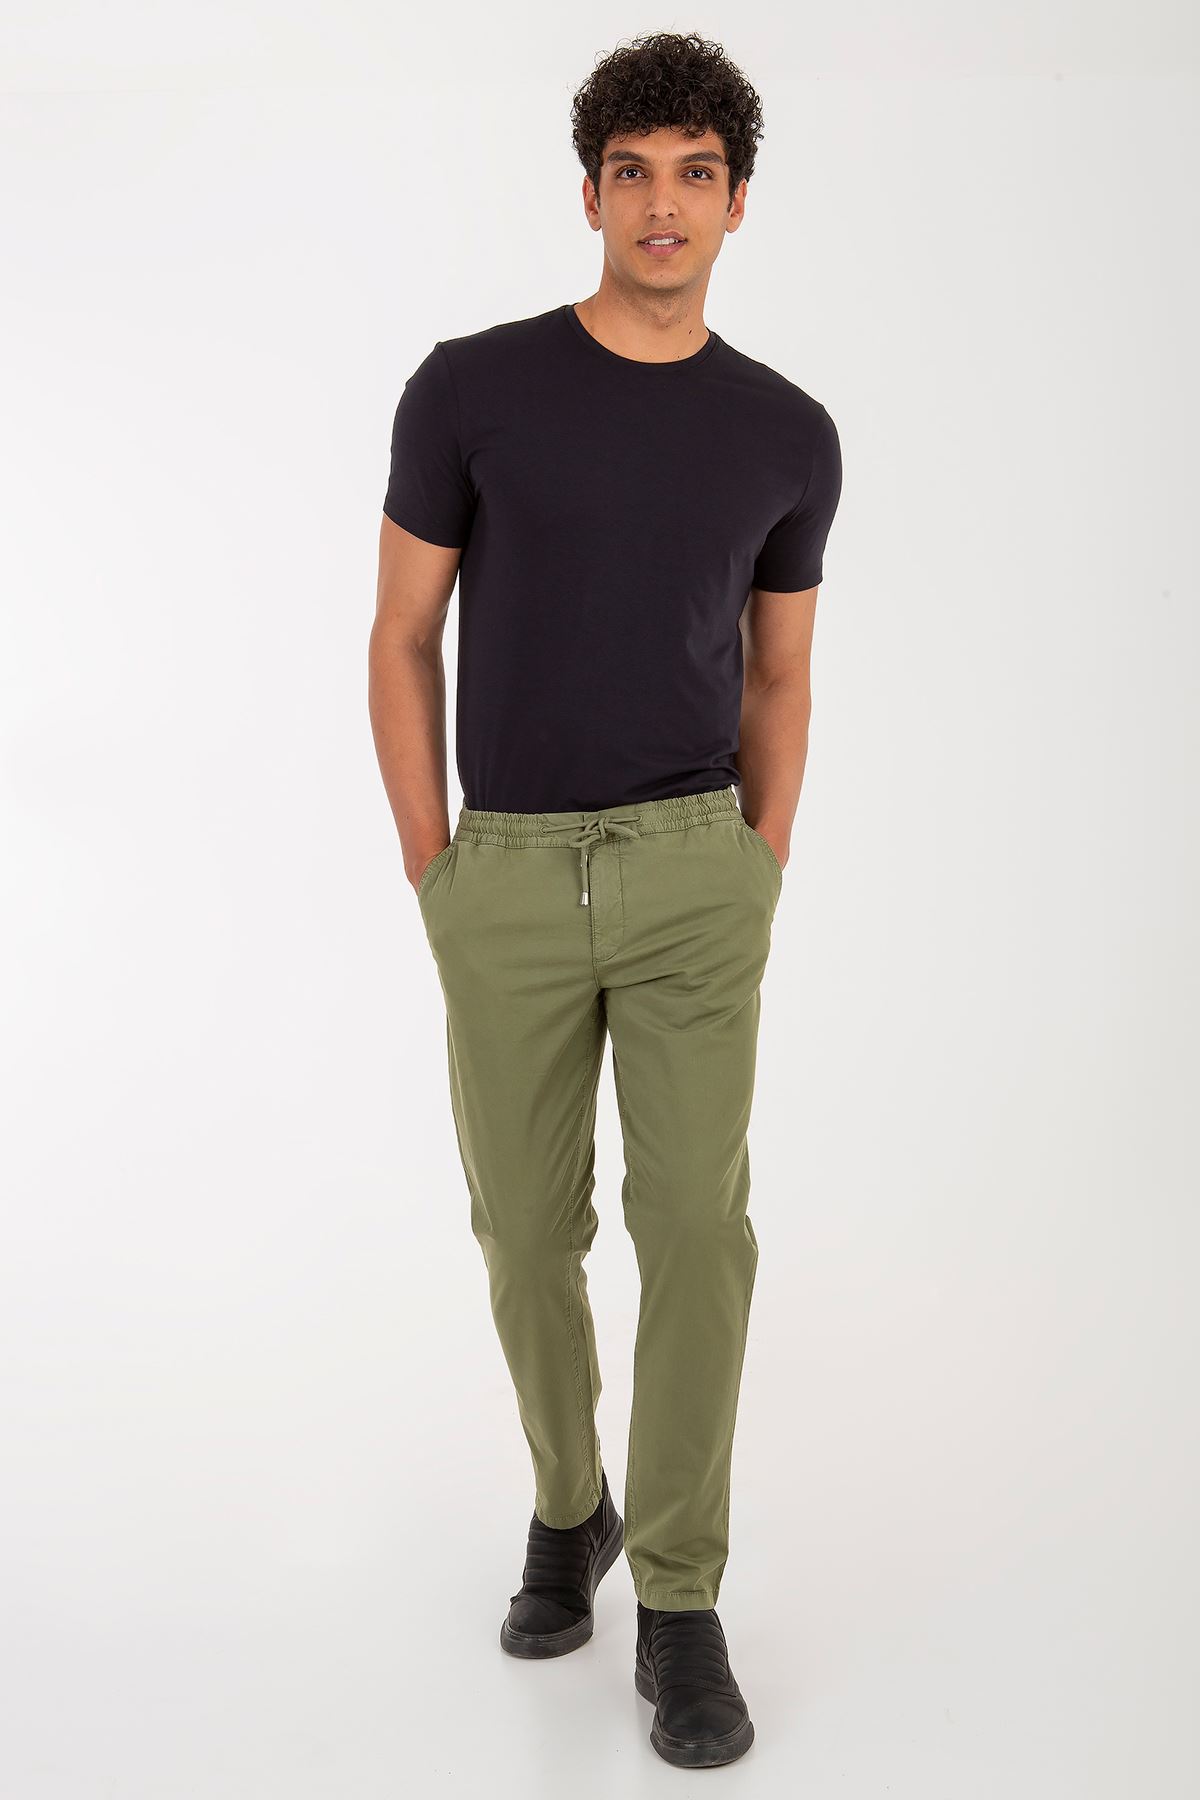 Fitz Roy Erkek Yeşil Beli Lastikli İp Bağlamalı Modern Fit Pantolon Mirror 